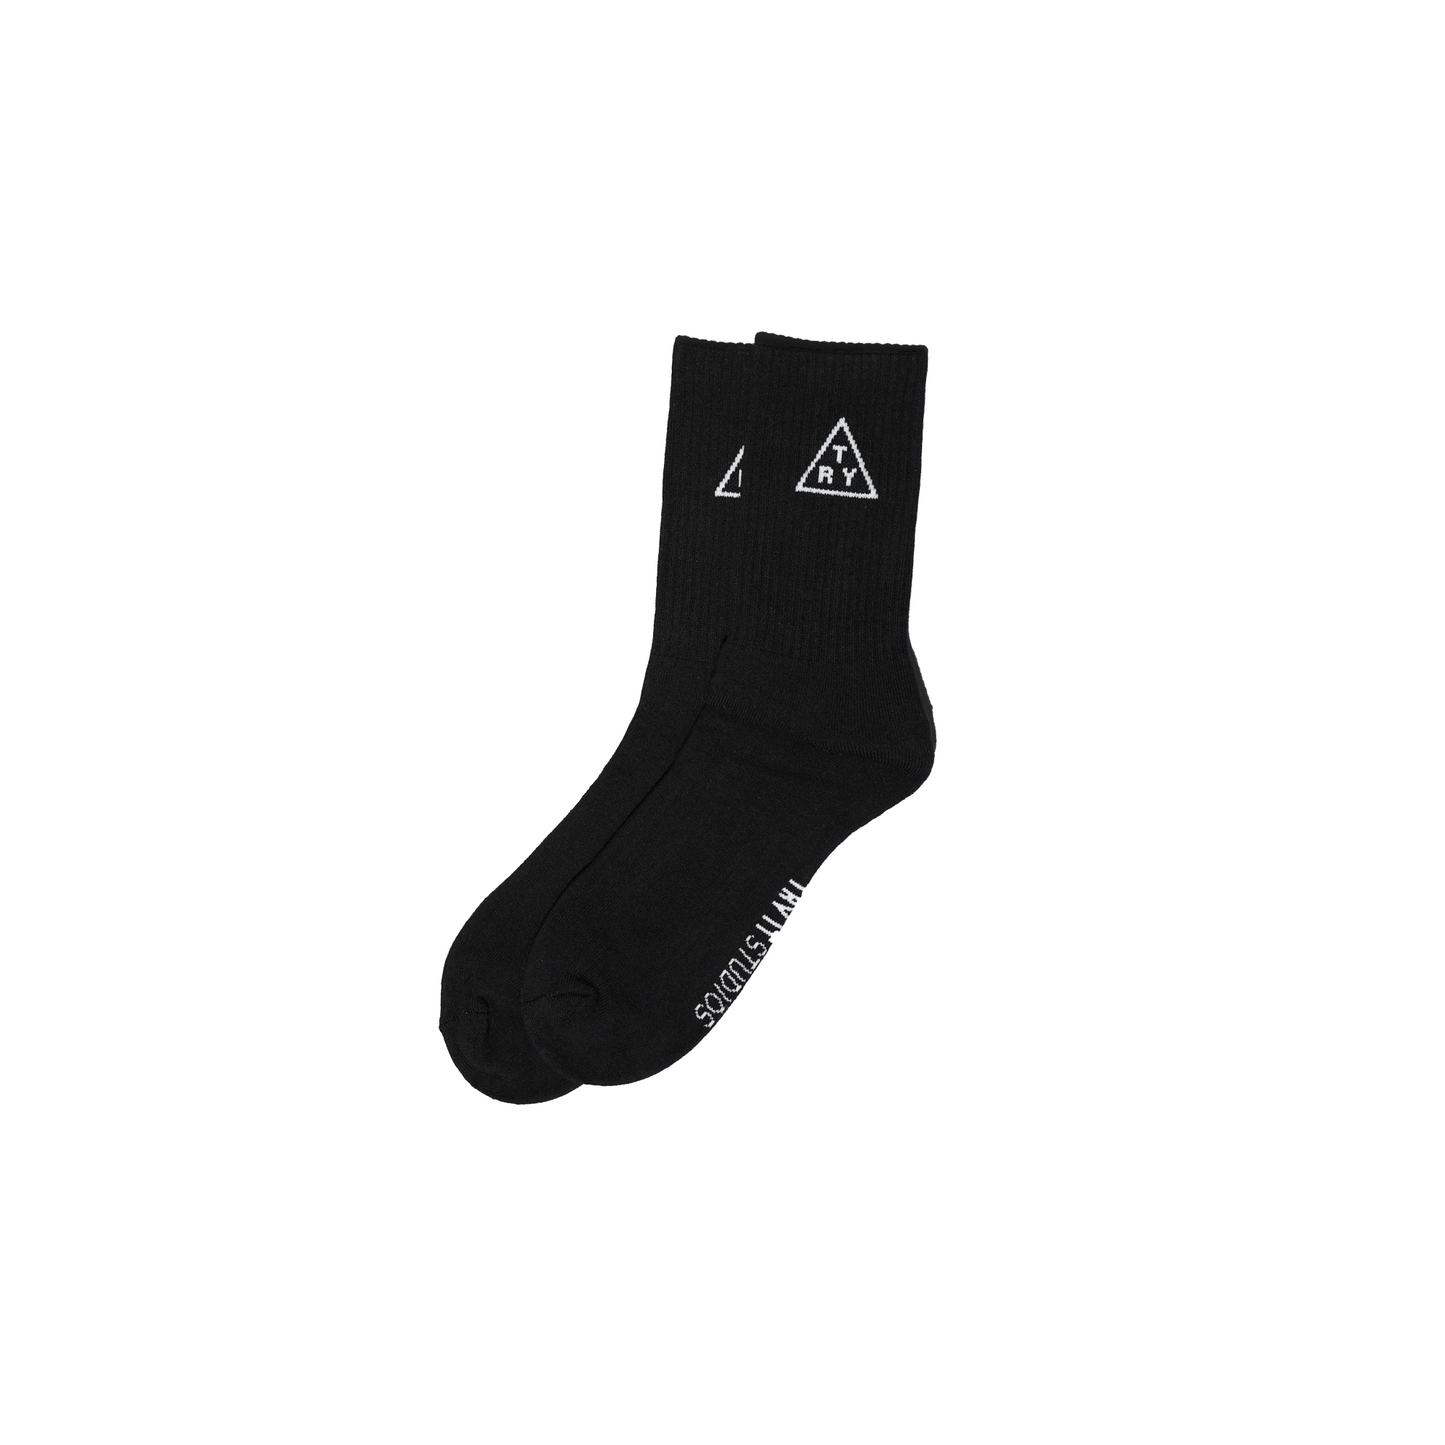 Try-Angle Socks (black)